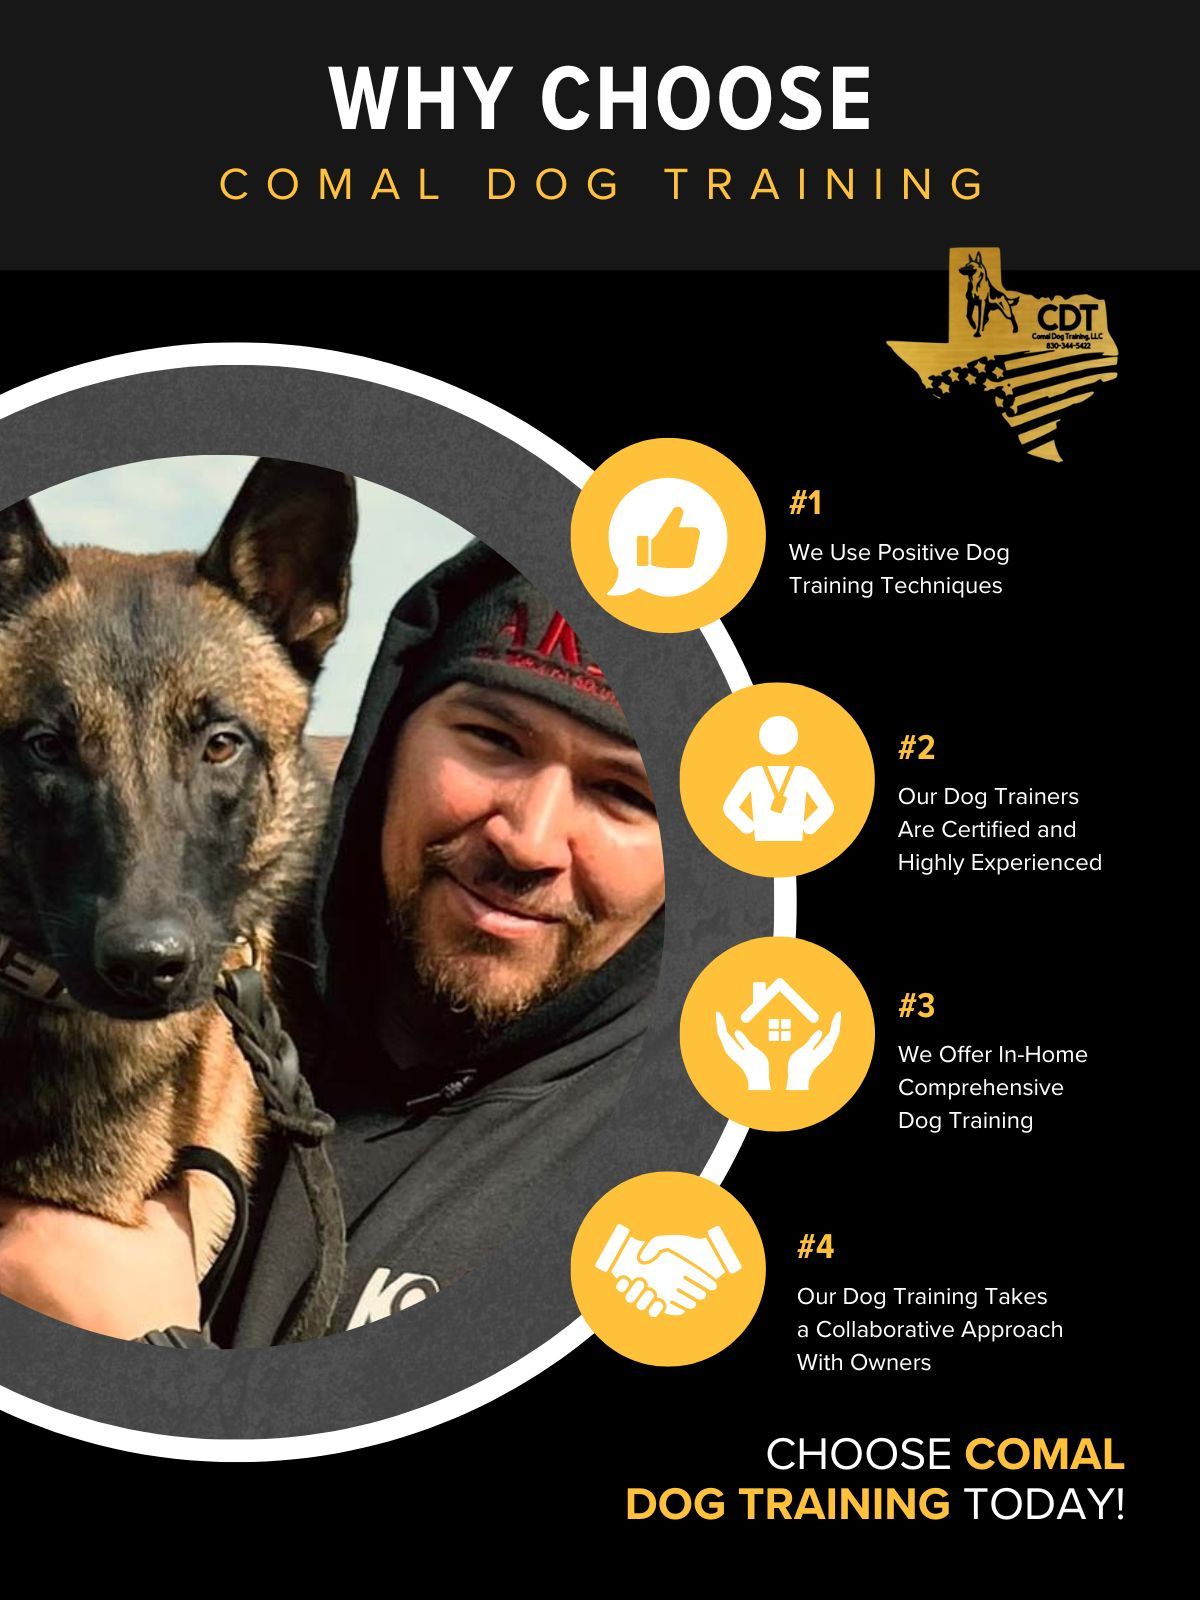 M38599 - Comal Dog Training Why Choose Comal Dog Training Infographic.jpg